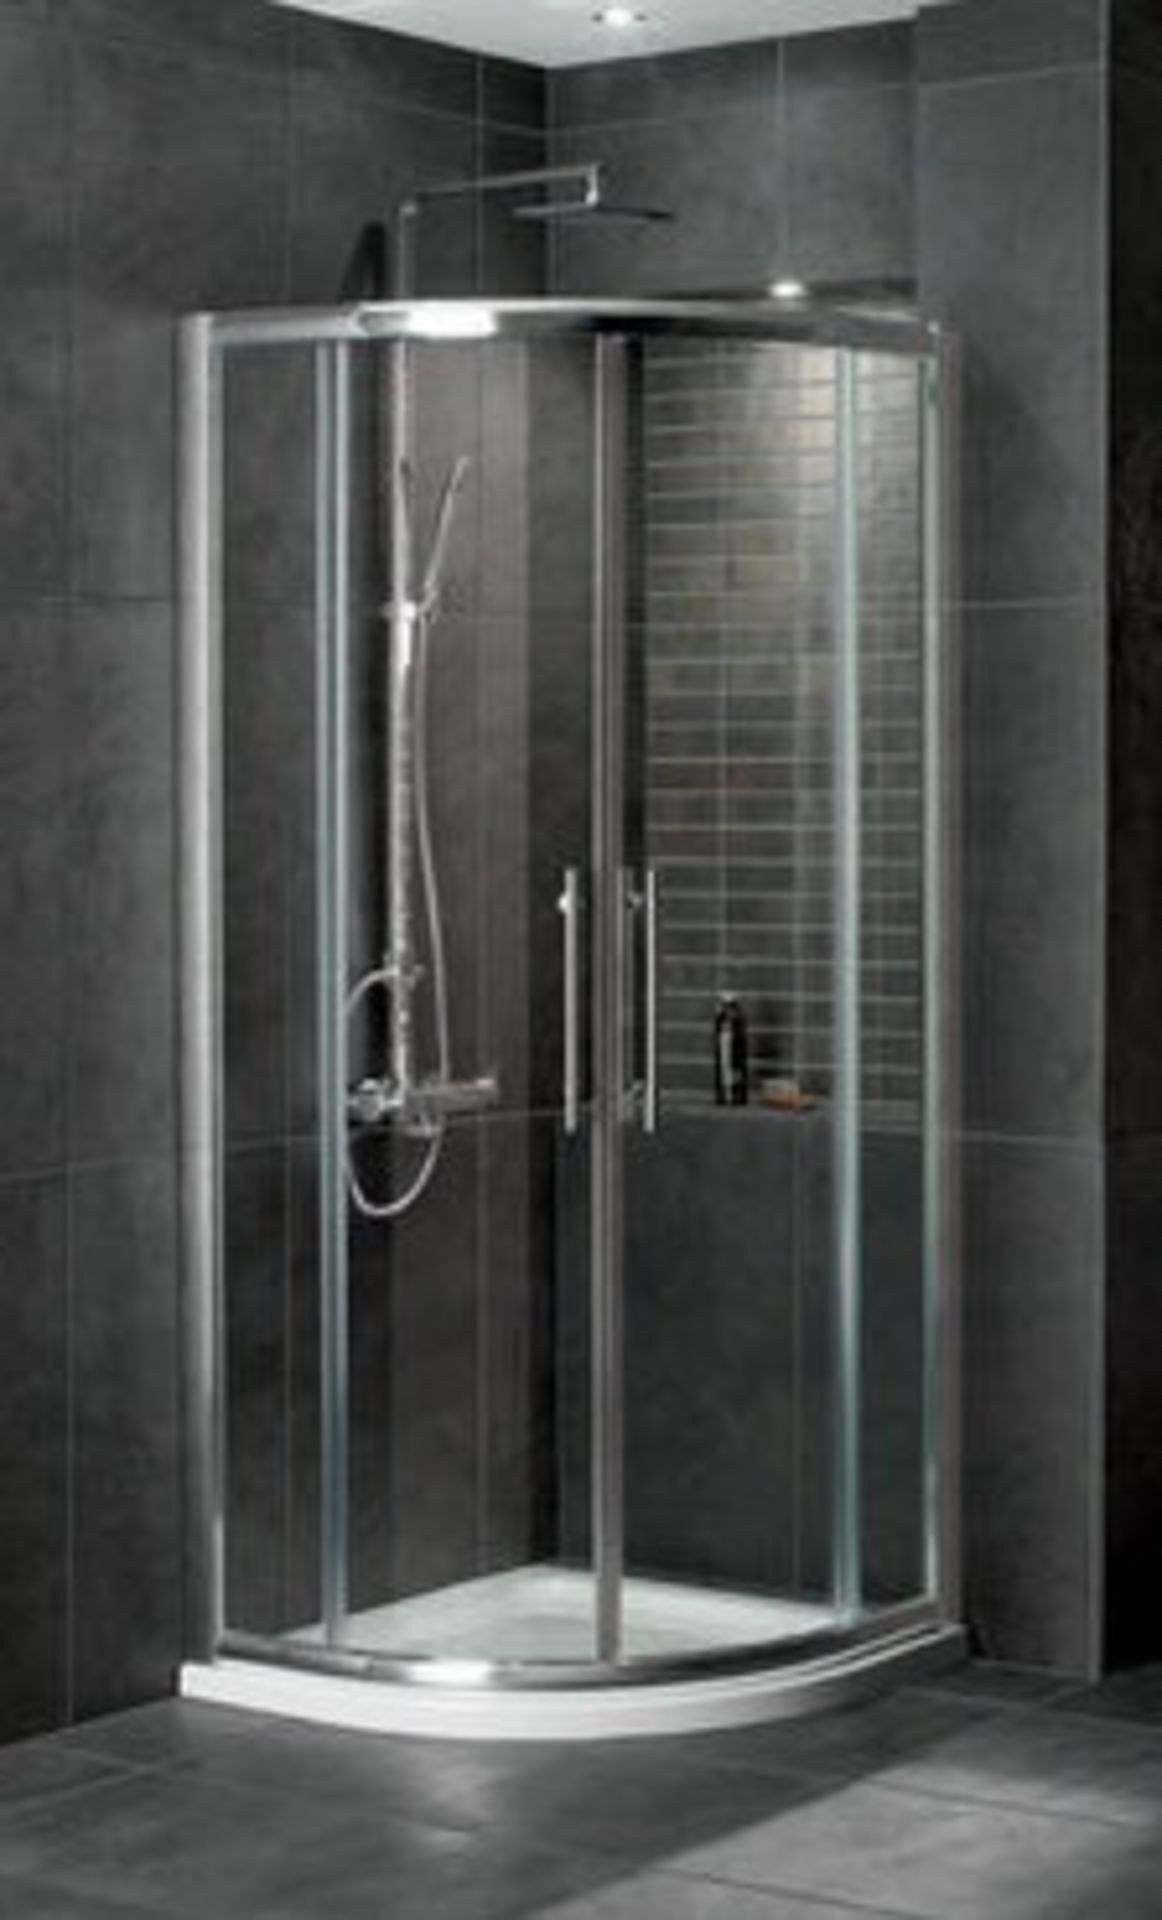 5 x Aqua Latus 800mm Double Door Quad Shower Enclosures - Polished Chrome Finish - Chrome on Brass T